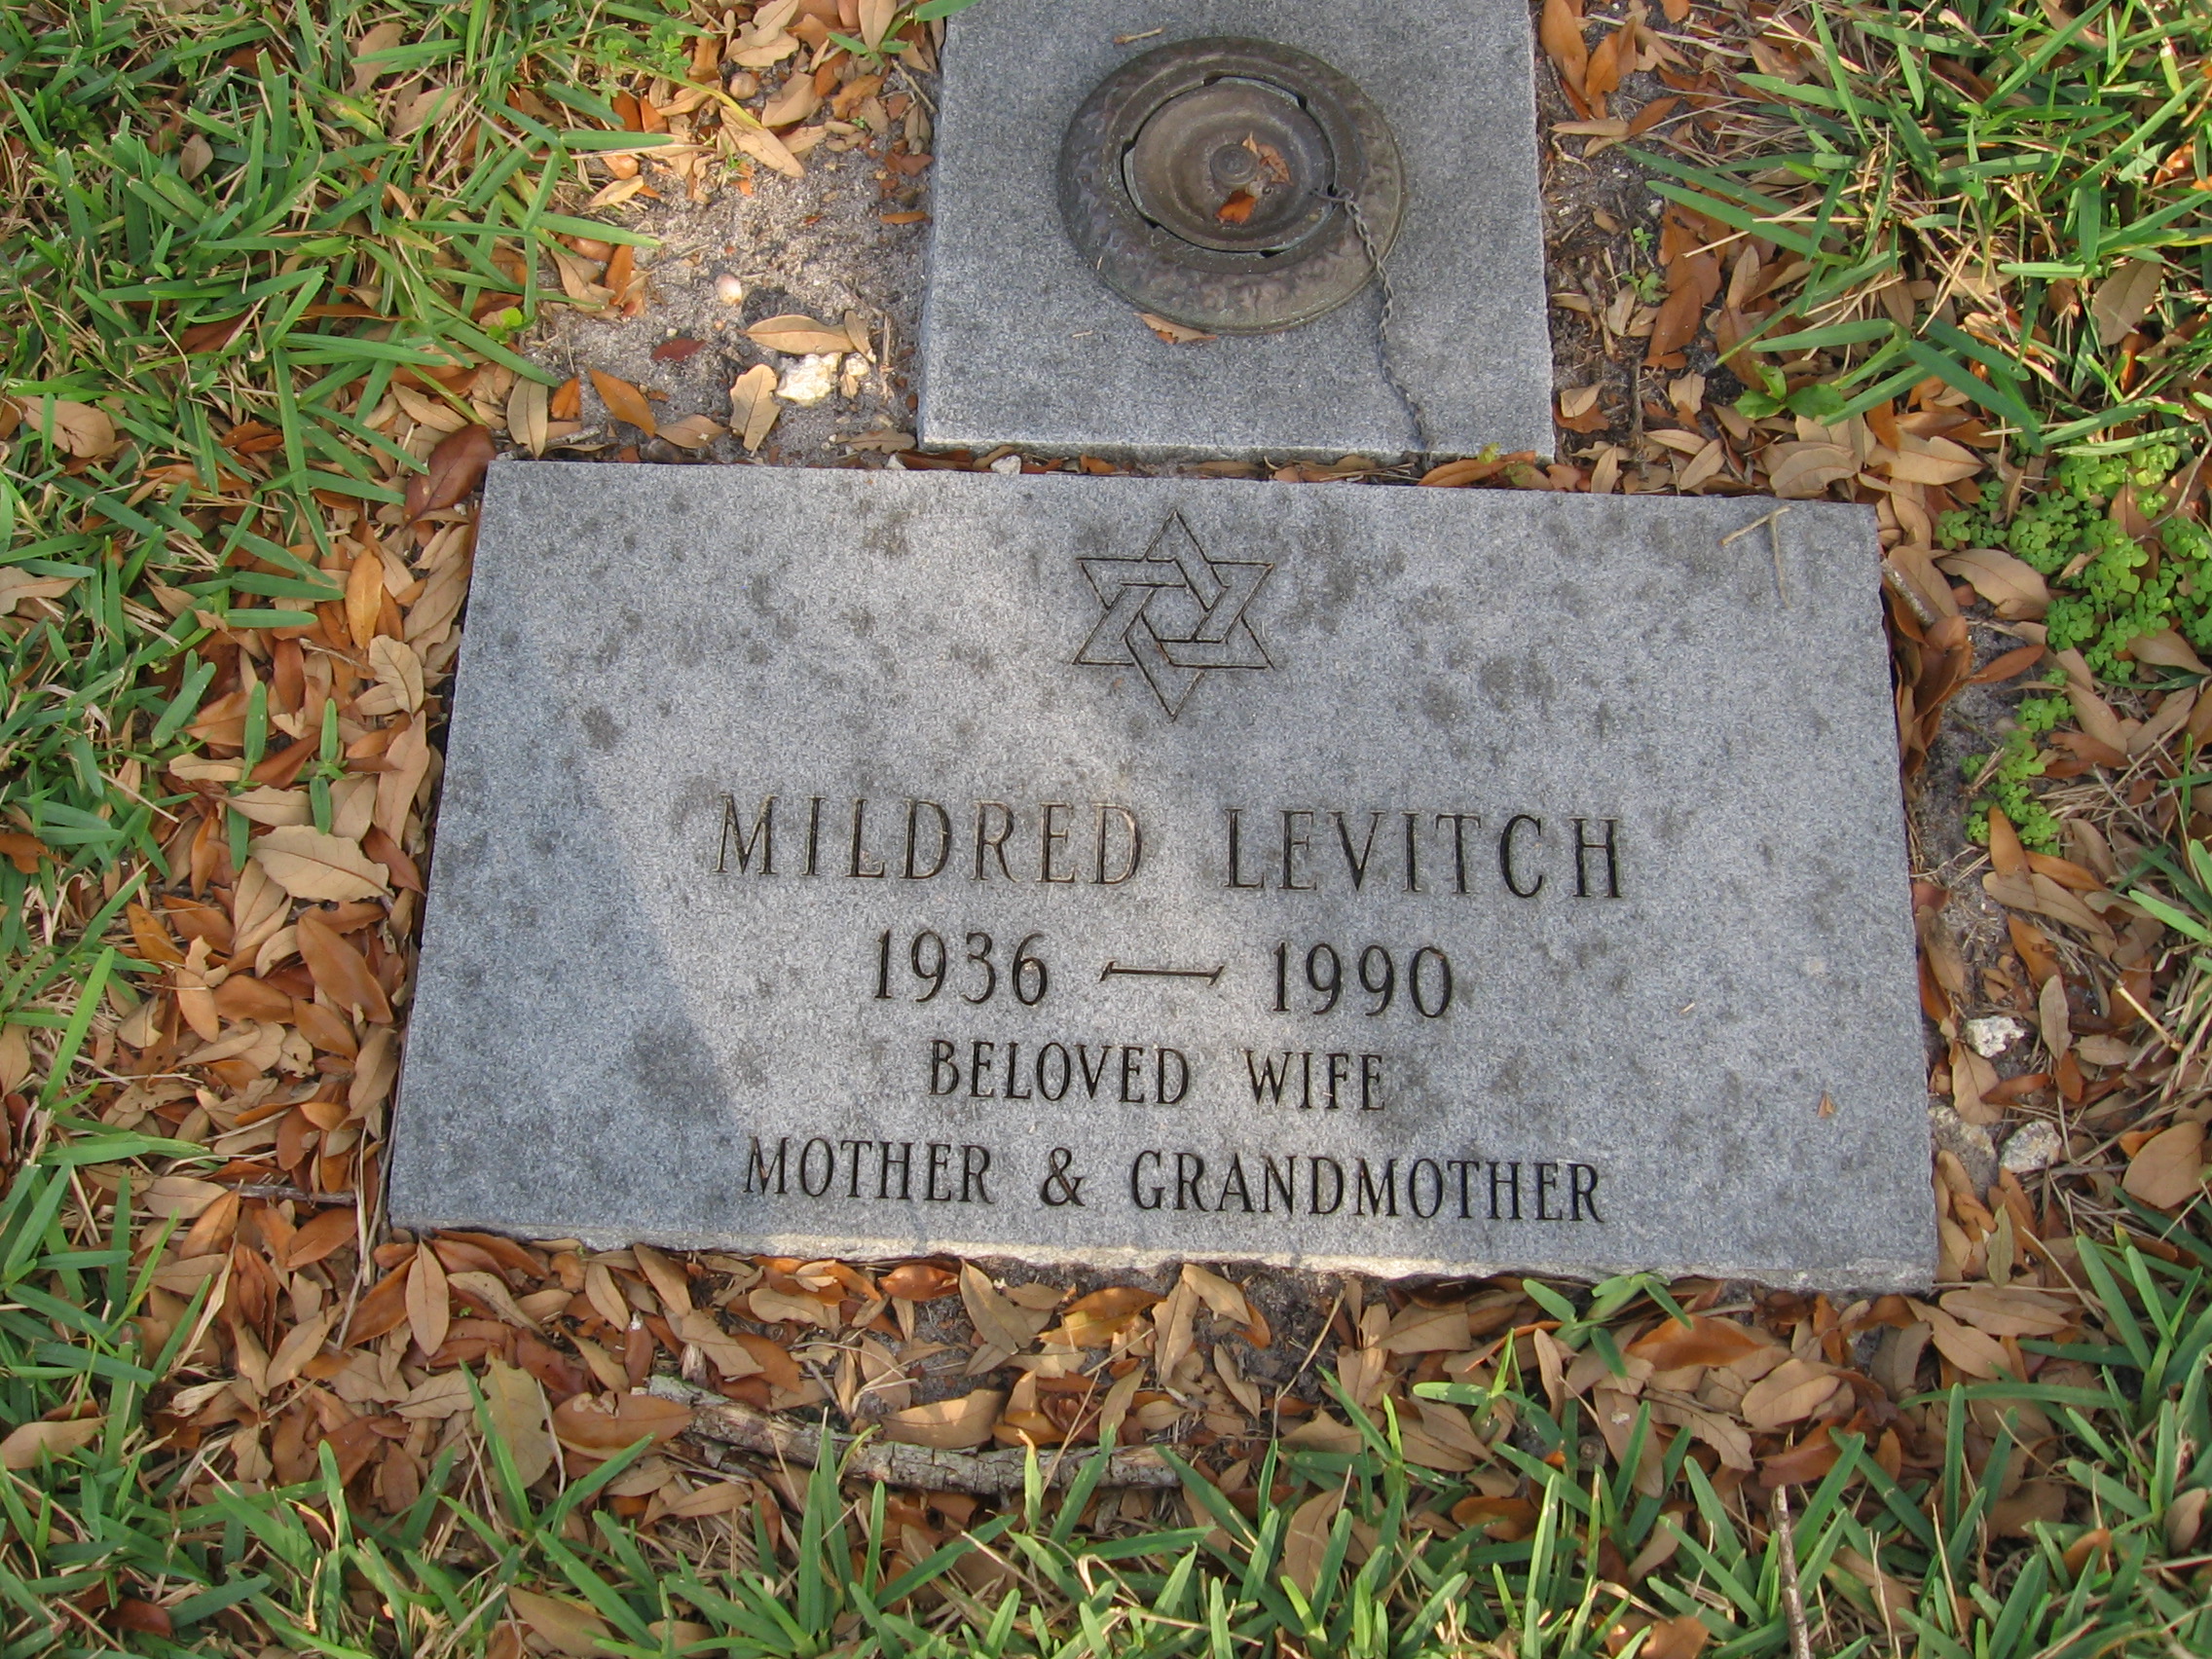 Mildred Levitch